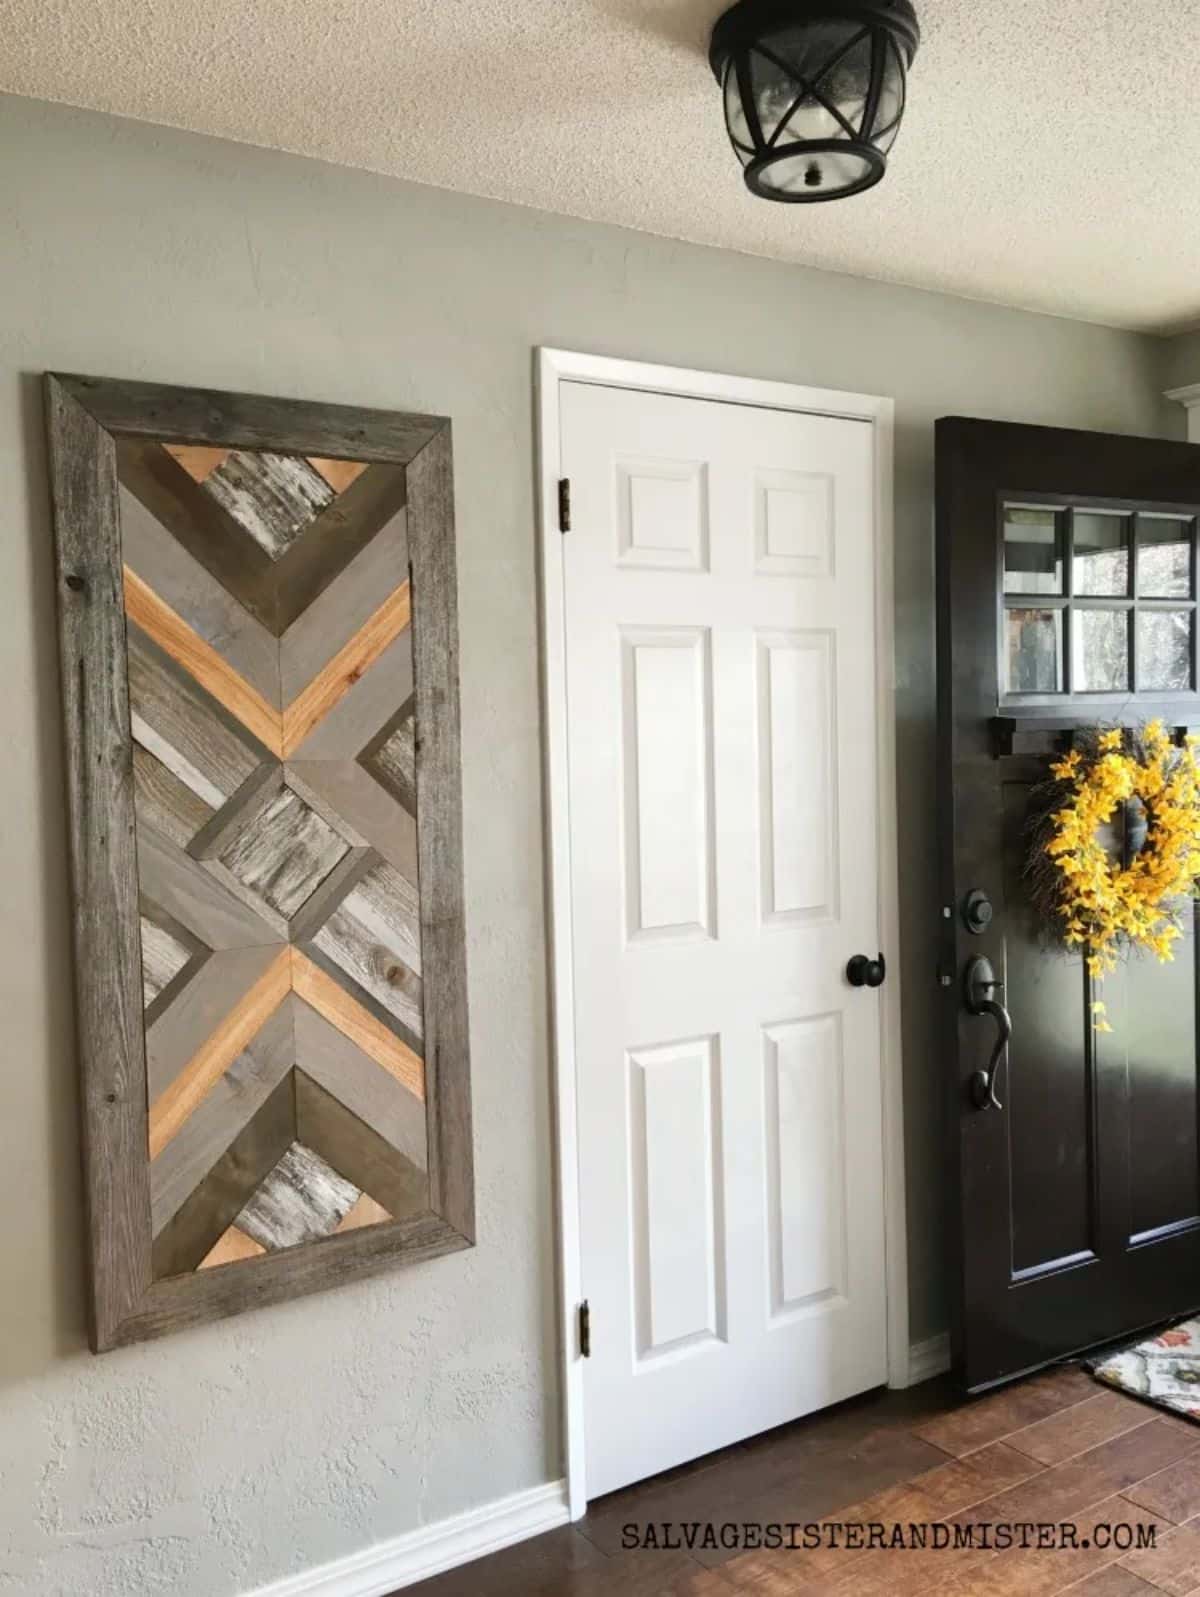 DIY Wood Quilt Wall Art